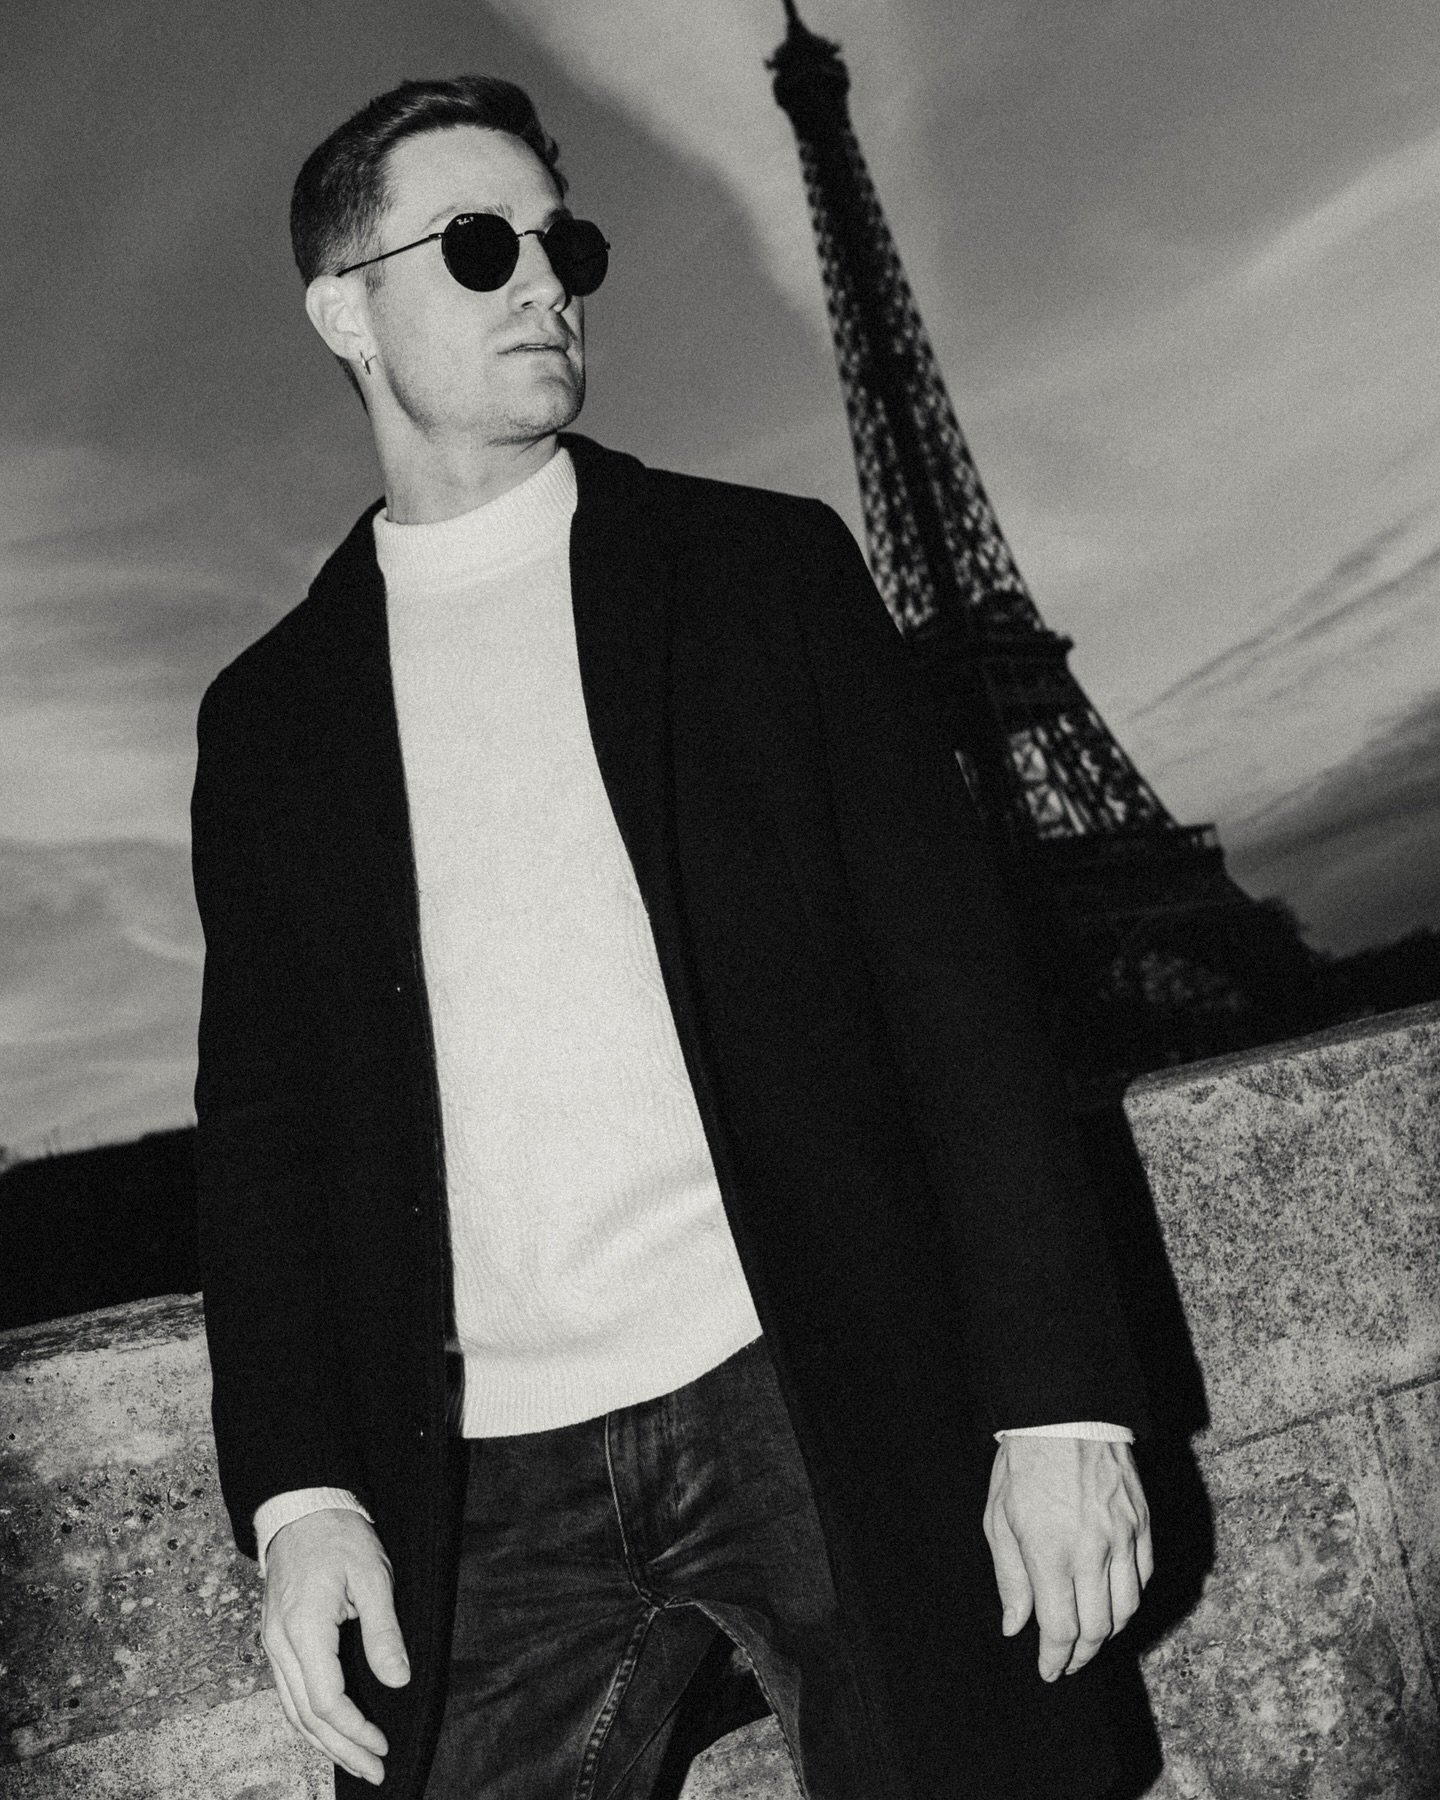 Merci Paris! 🫶🏻 See you at the next fashion week! #PFW

📸 @sanfrancesco.art
&mdash;&mdash;&mdash;&mdash;&mdash;&mdash;&mdash;&mdash;&mdash;&mdash;&mdash;&mdash;
&copy; @dts.frames
➴ Paris, France
⌬ Shot on Sony a7IV + Sigma Art 35mm f1.4
&mdash;&m